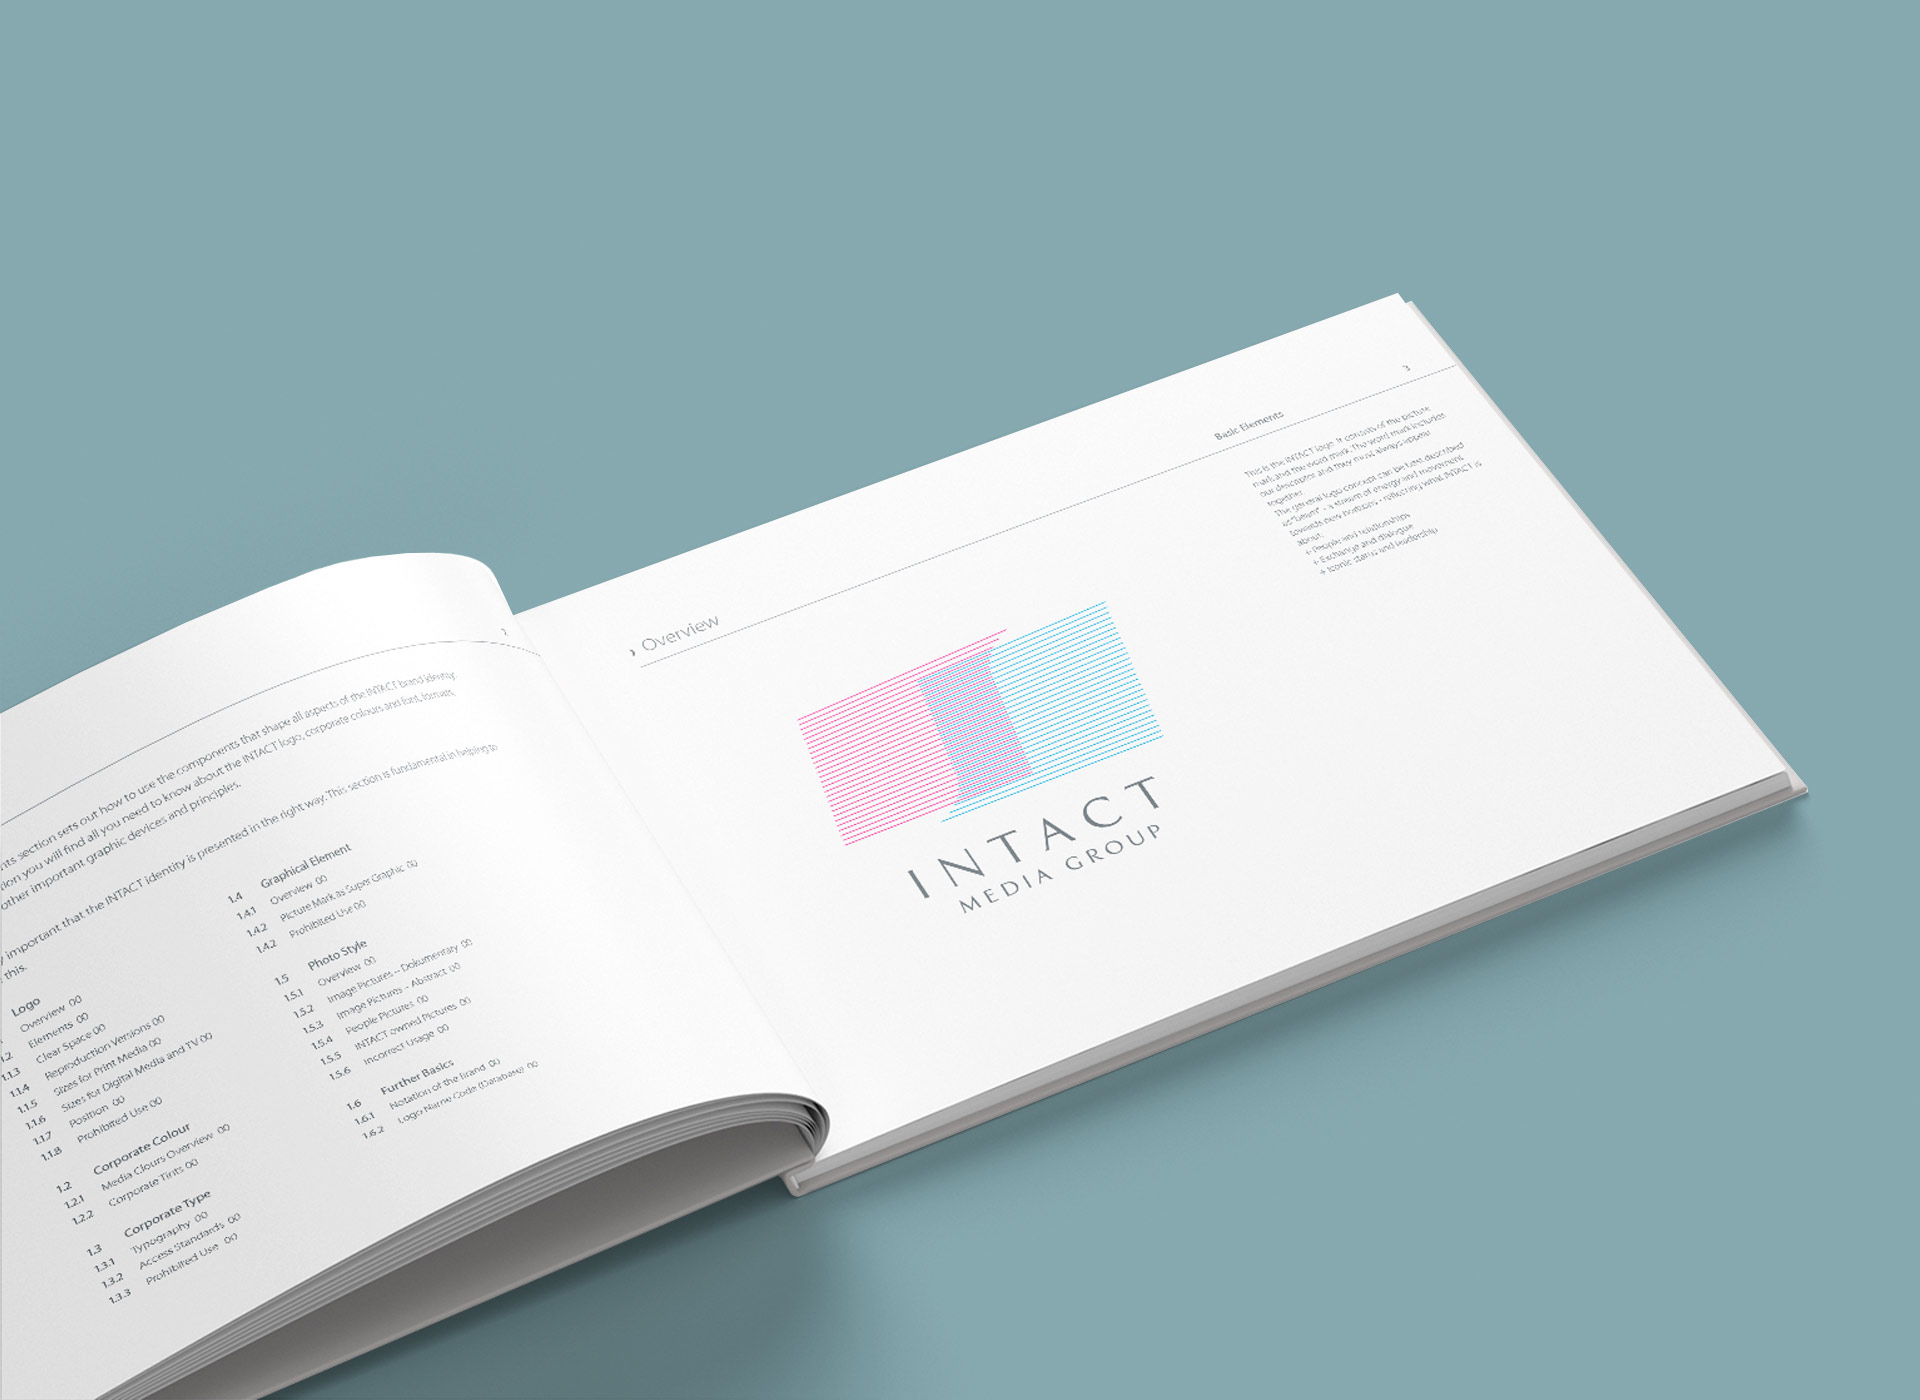 Intact Media Group portfolio inoveo brand book